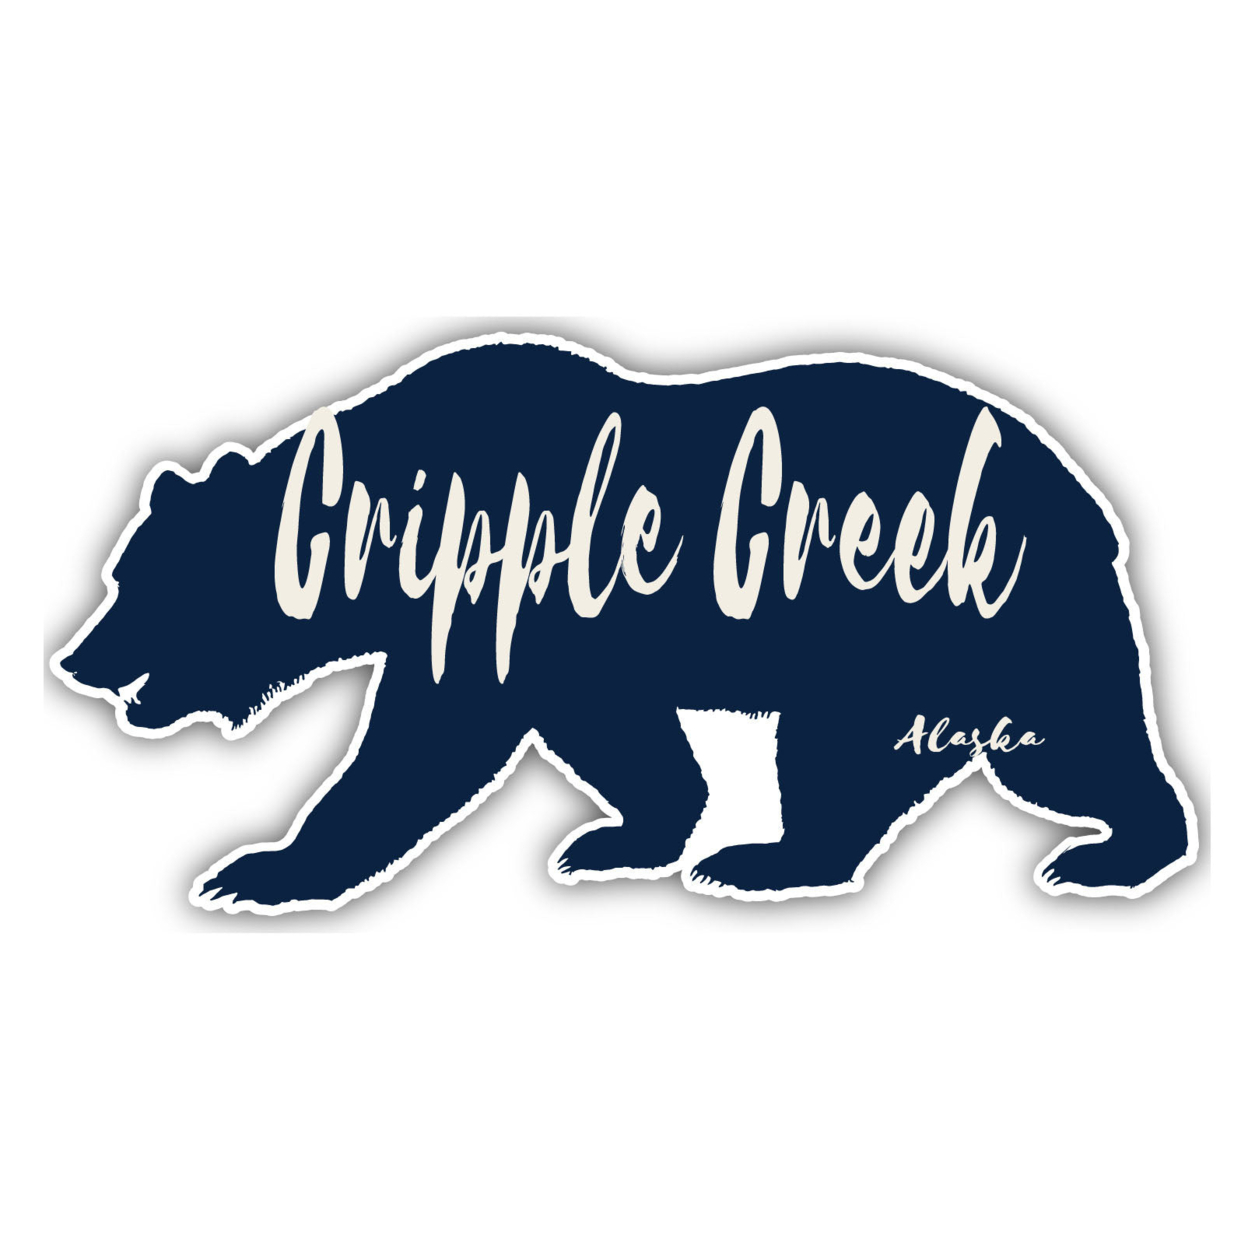 Cripple Creek Alaska Souvenir Decorative Stickers (Choose Theme And Size) - 4-Pack, 4-Inch, Bear